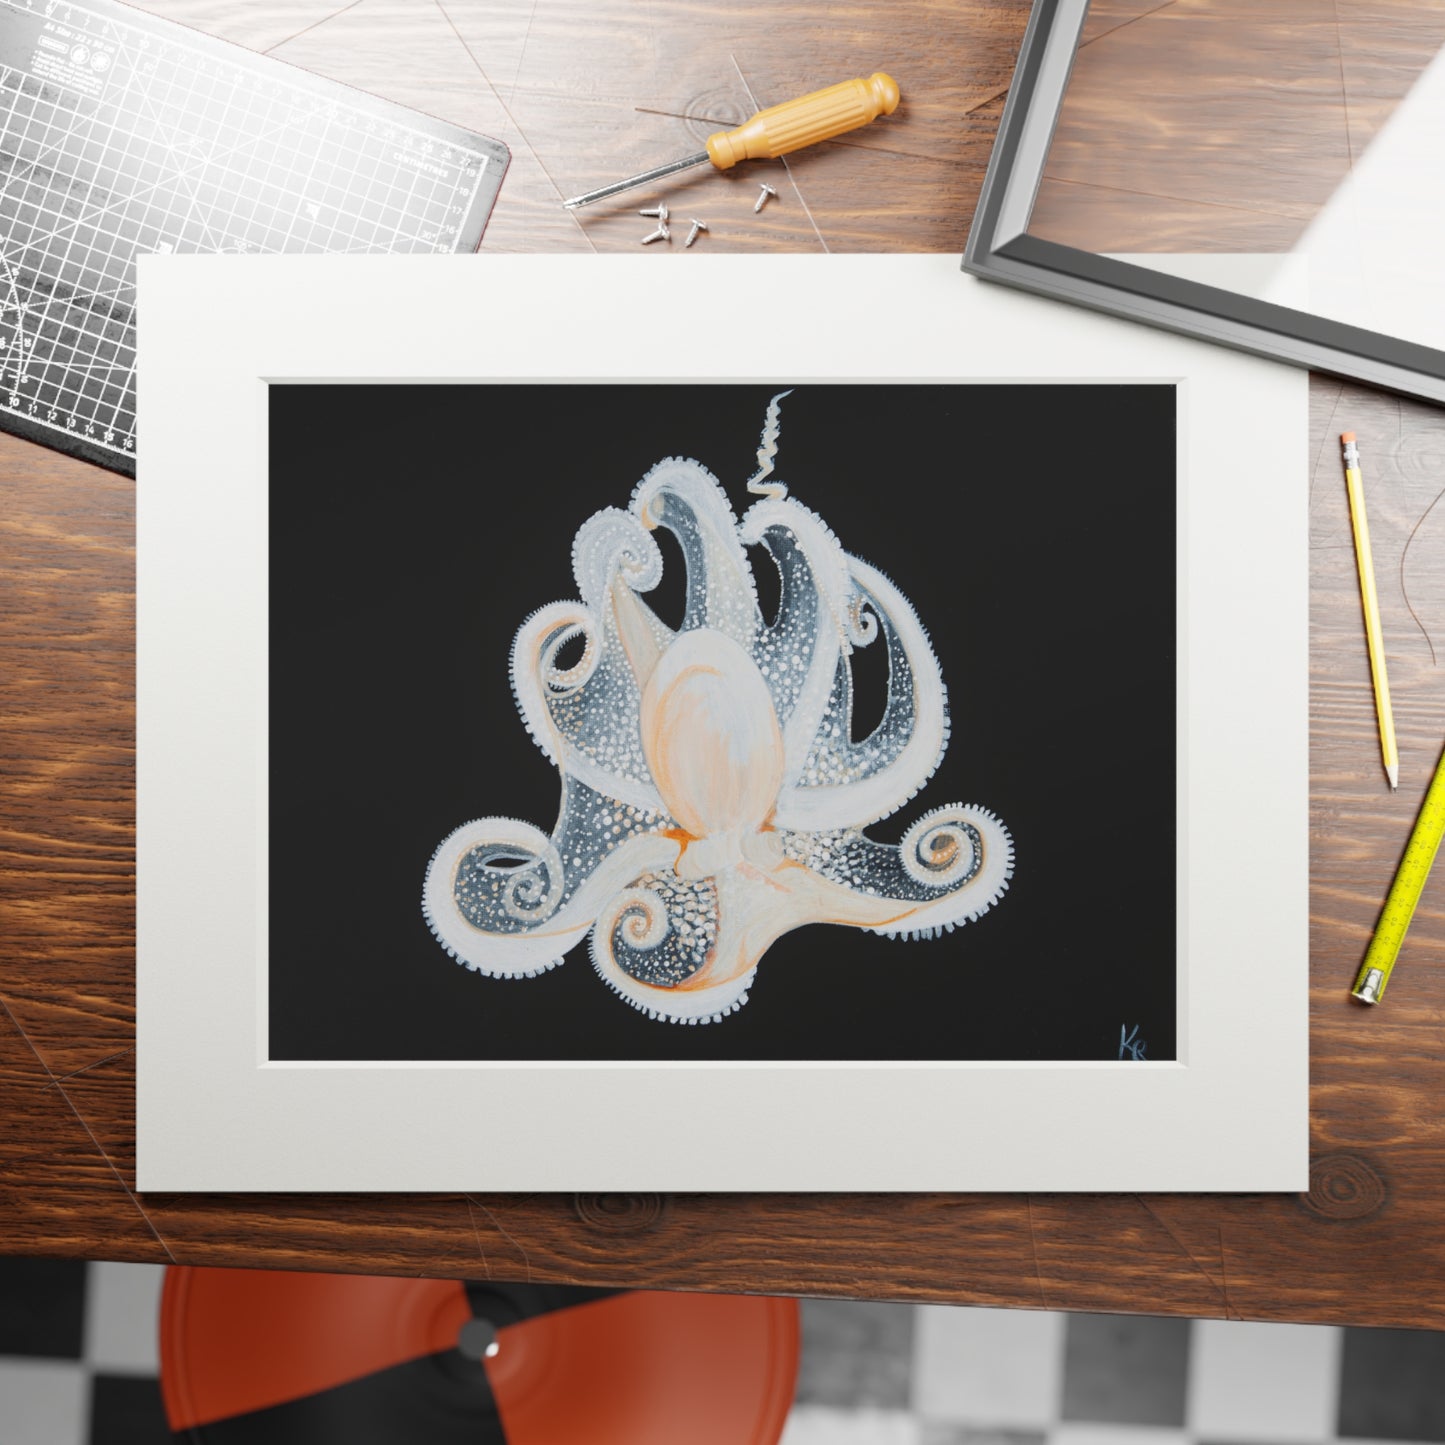 White Octopus 11x14" Mat Giclee Prints